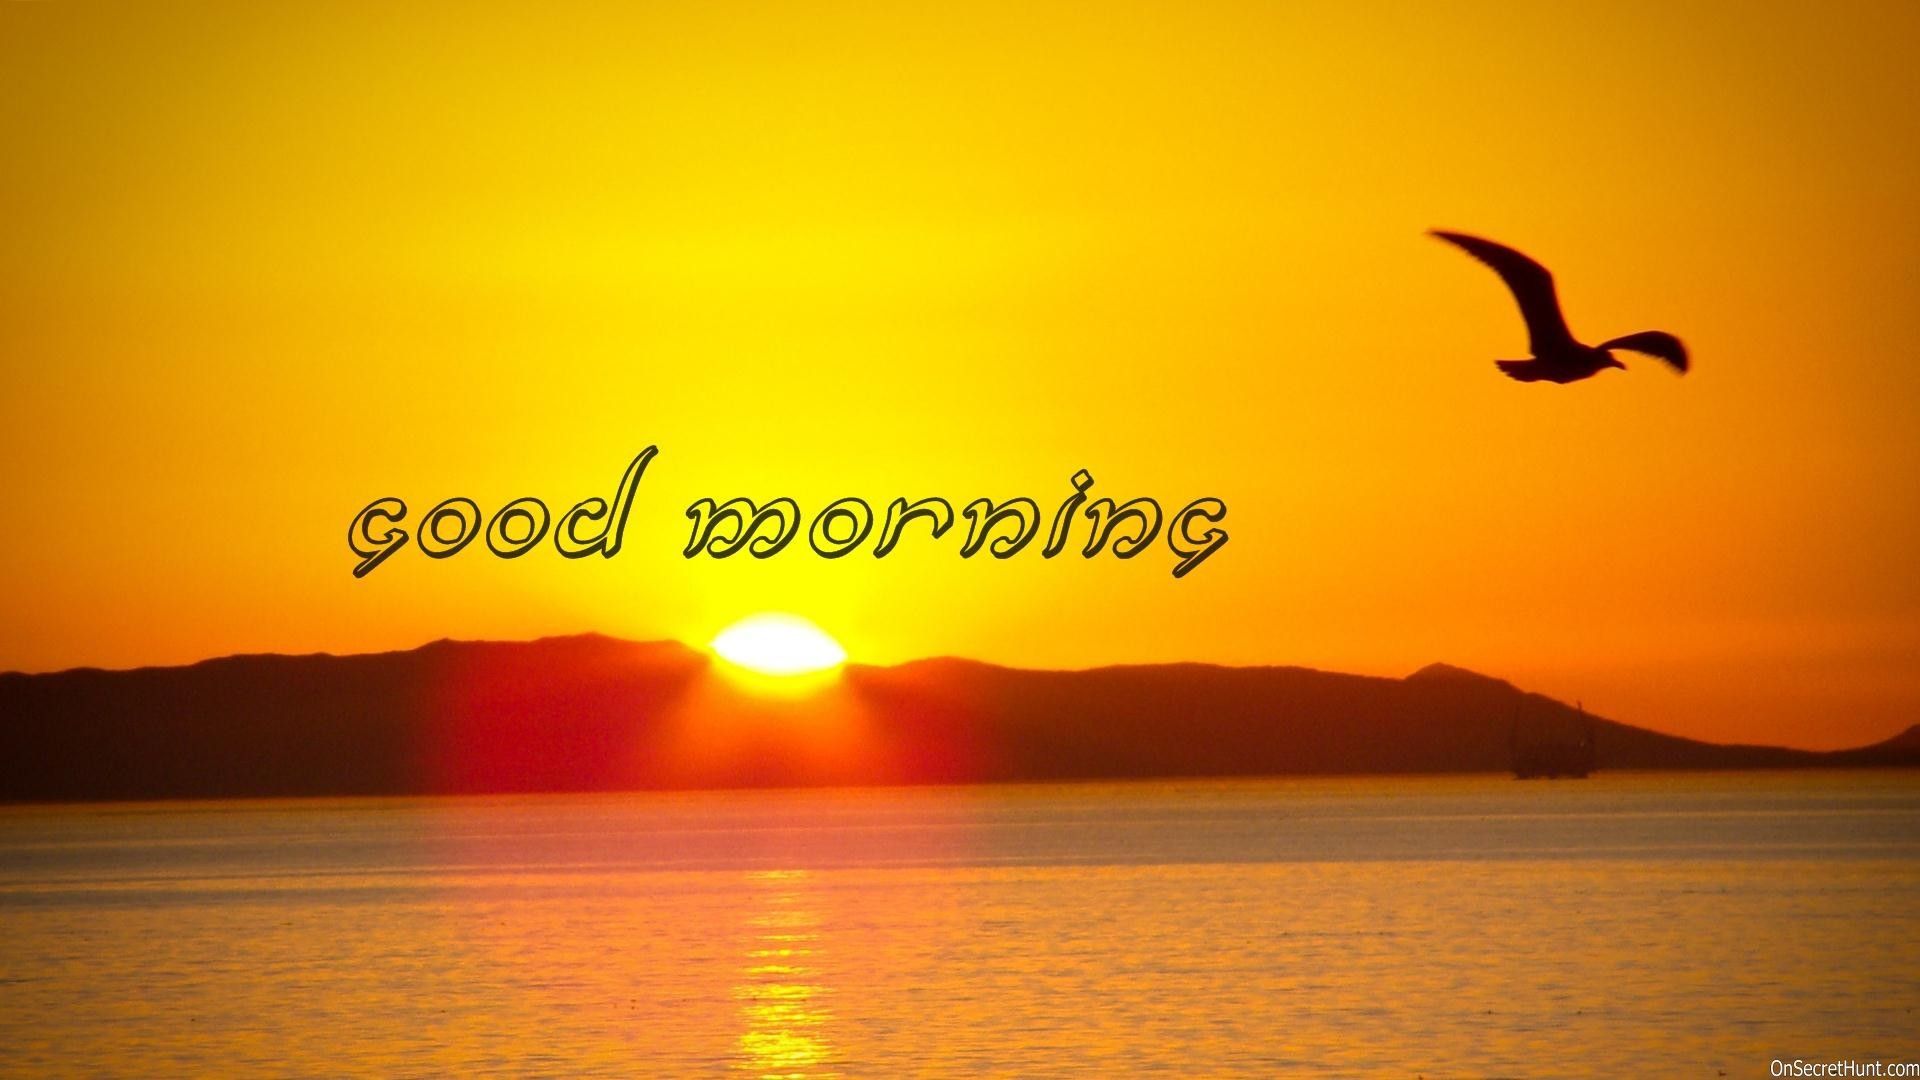 1920x1080 Sun Rising Good Morning Wallpaper. Morning picture, Good morning picture, Good morning sunrise on WallpaperBat